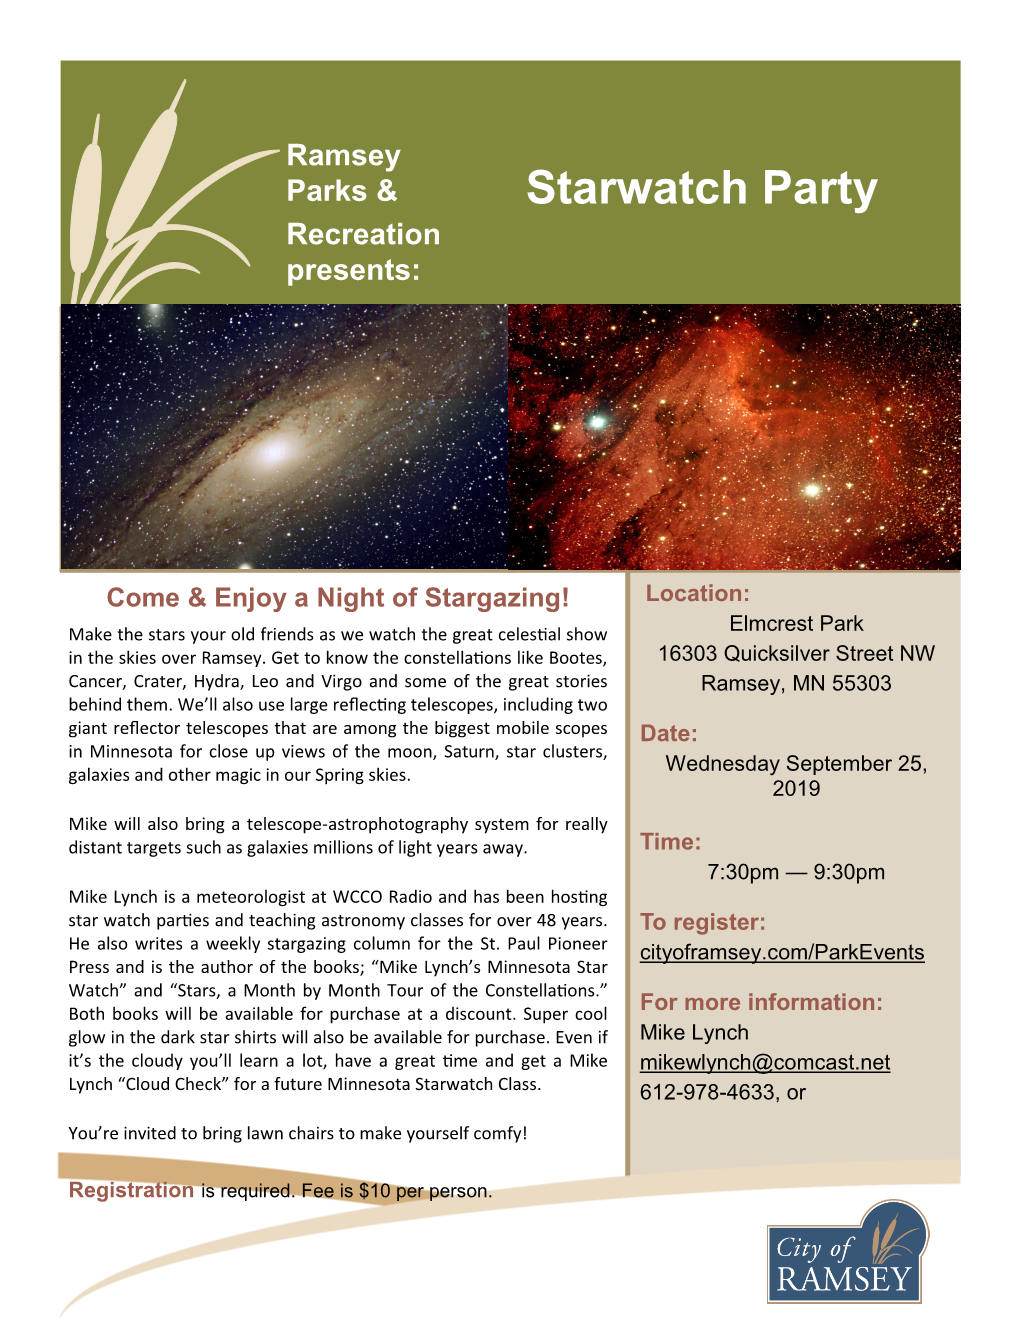 Starwatch Party Recreation Presents